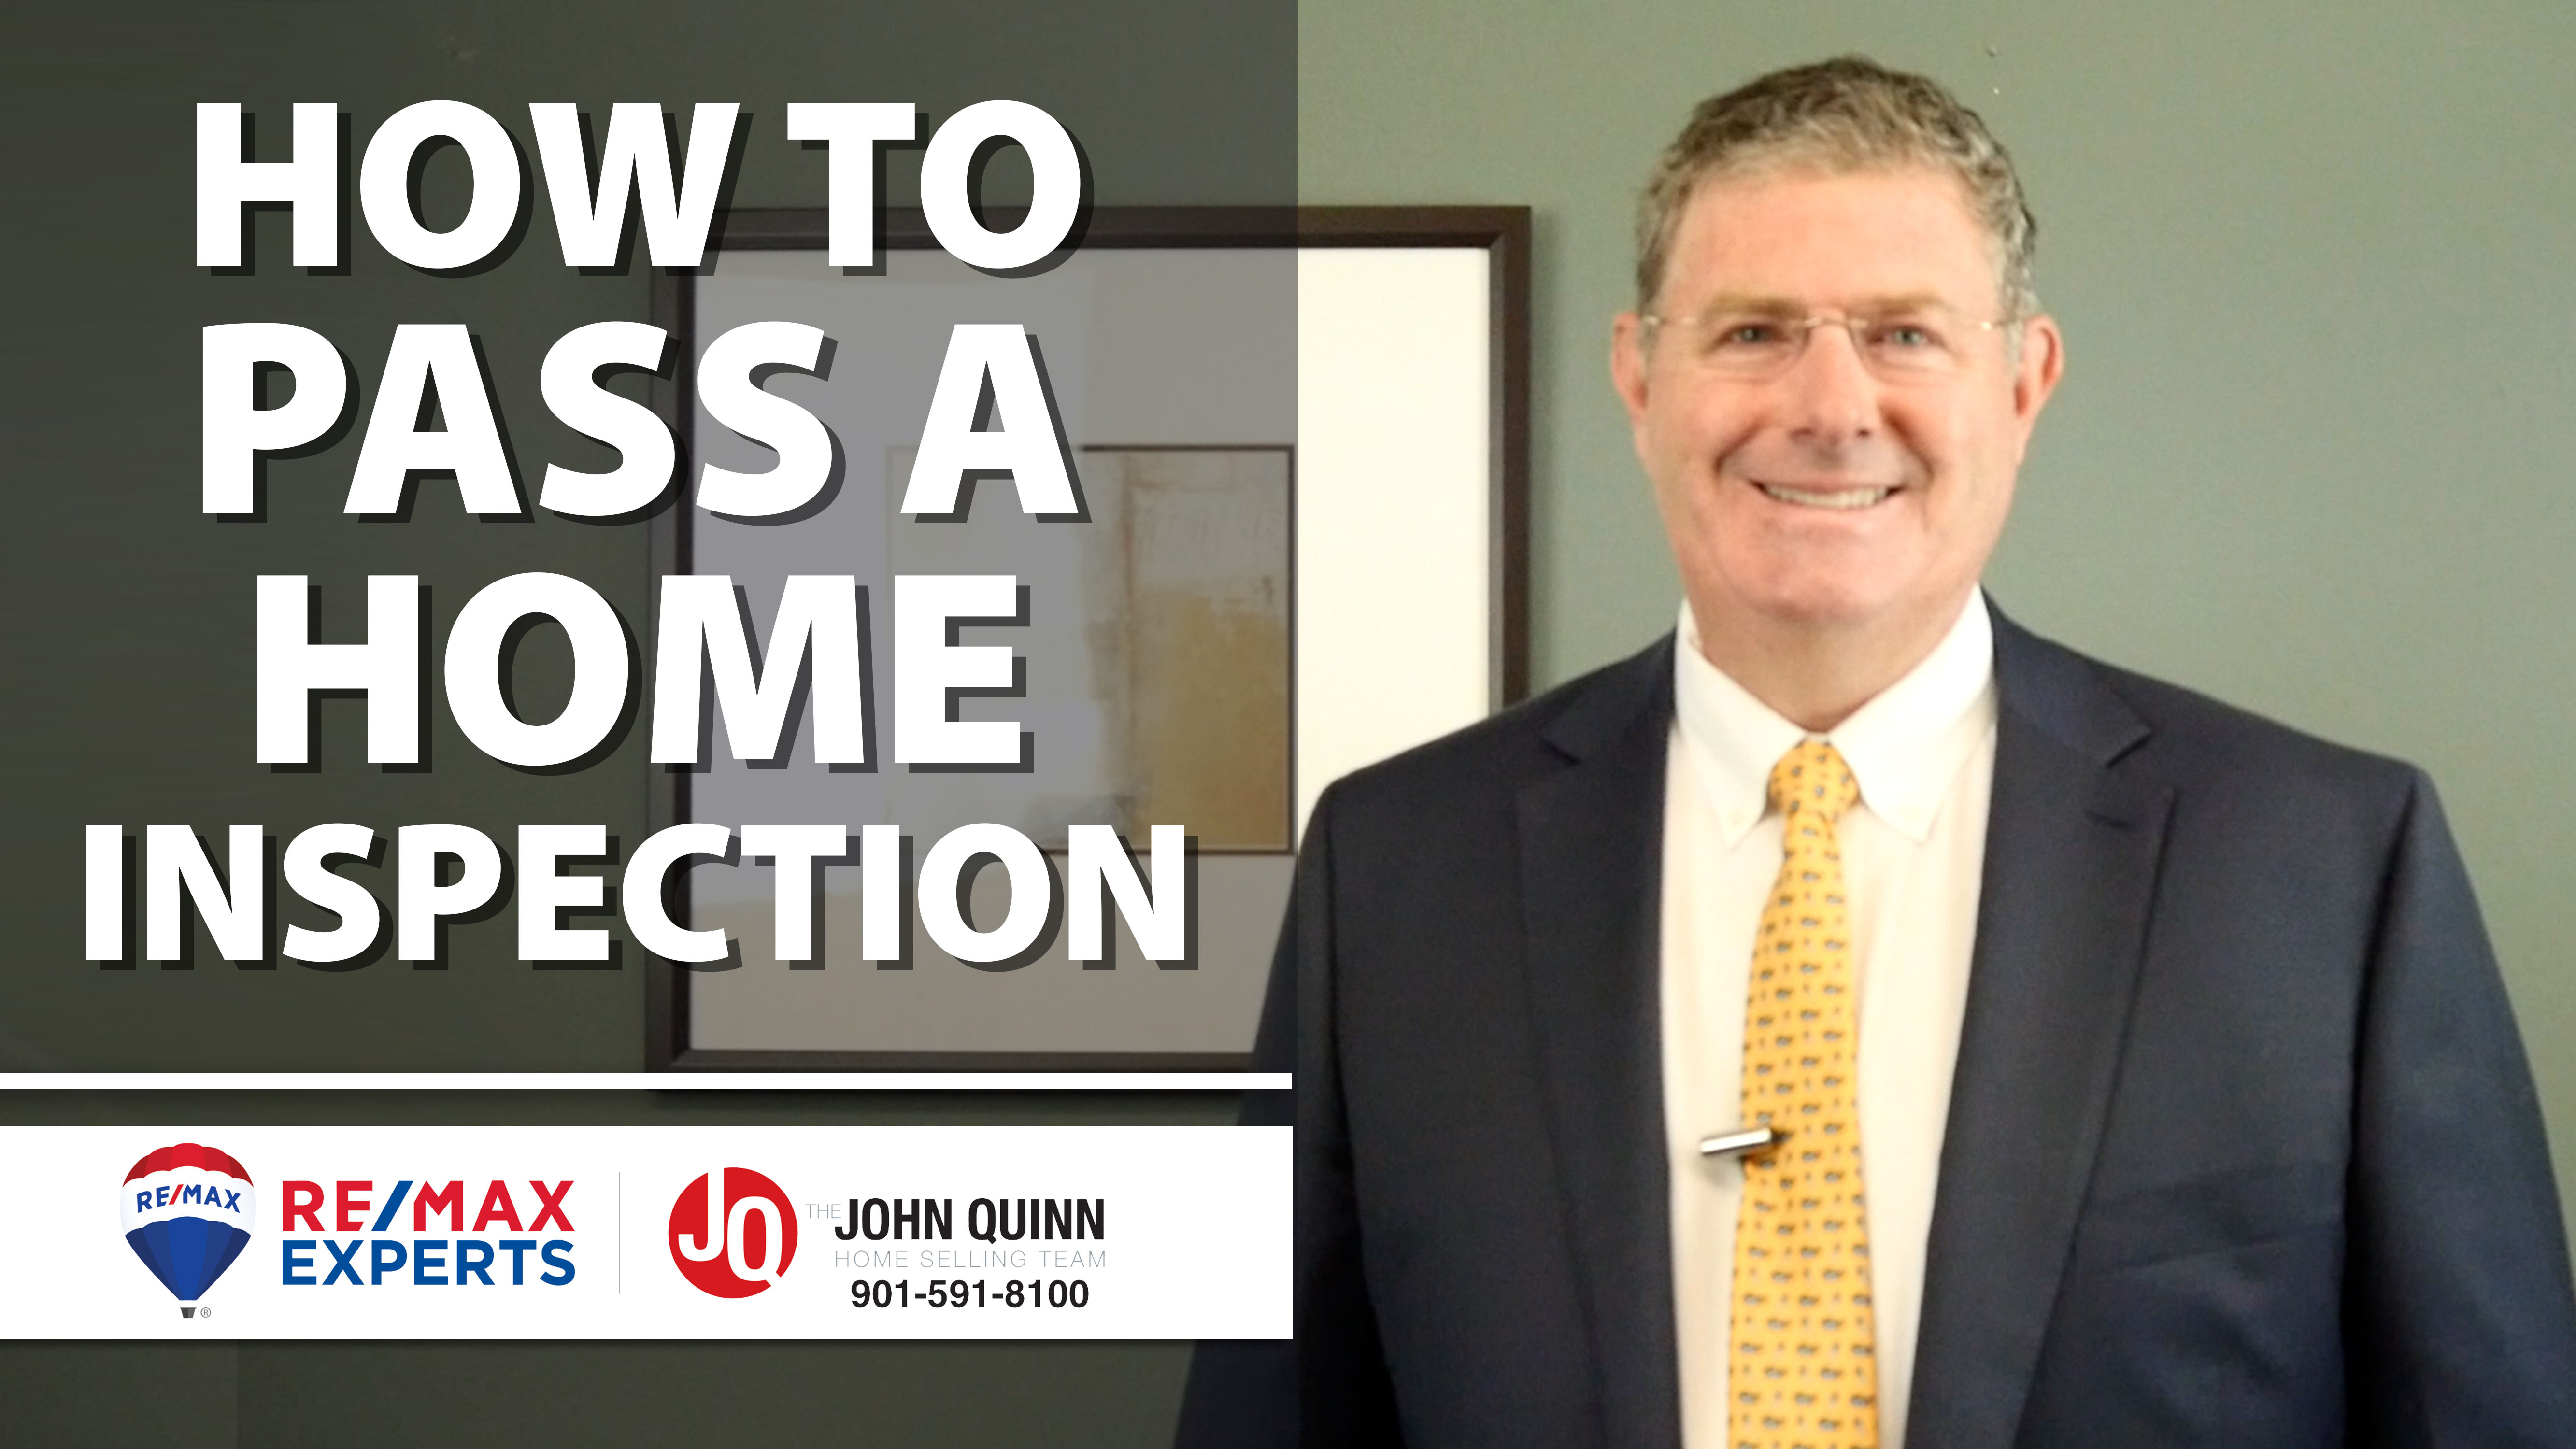 Q: How Do You Pass a Home Inspection?